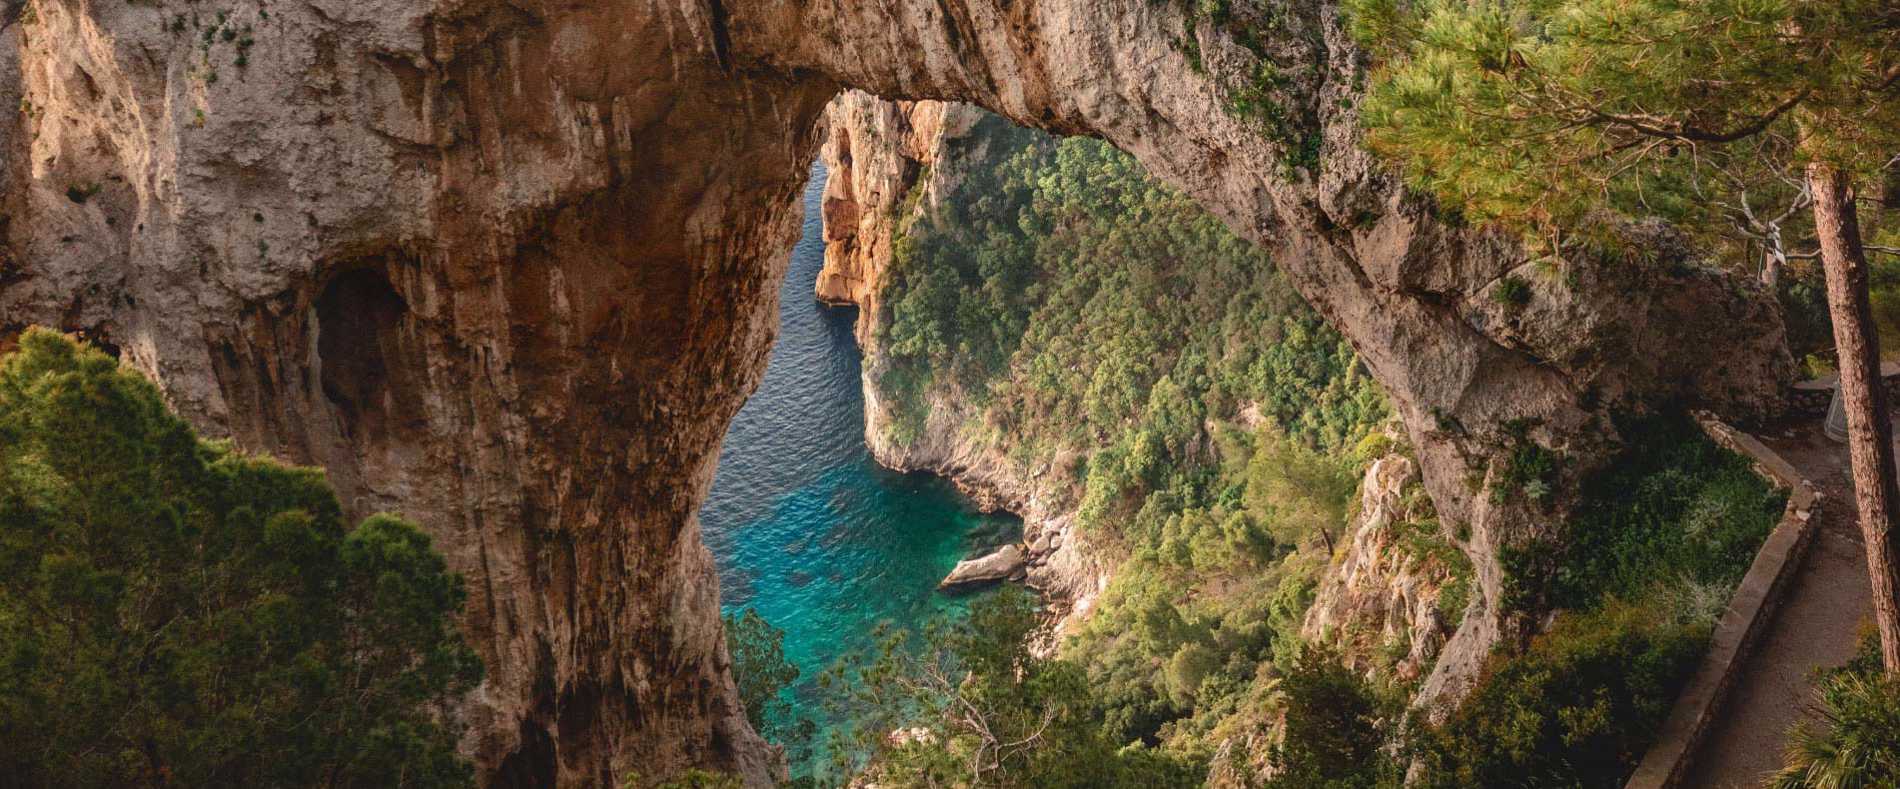 Capri Italy ocean cave aerial view